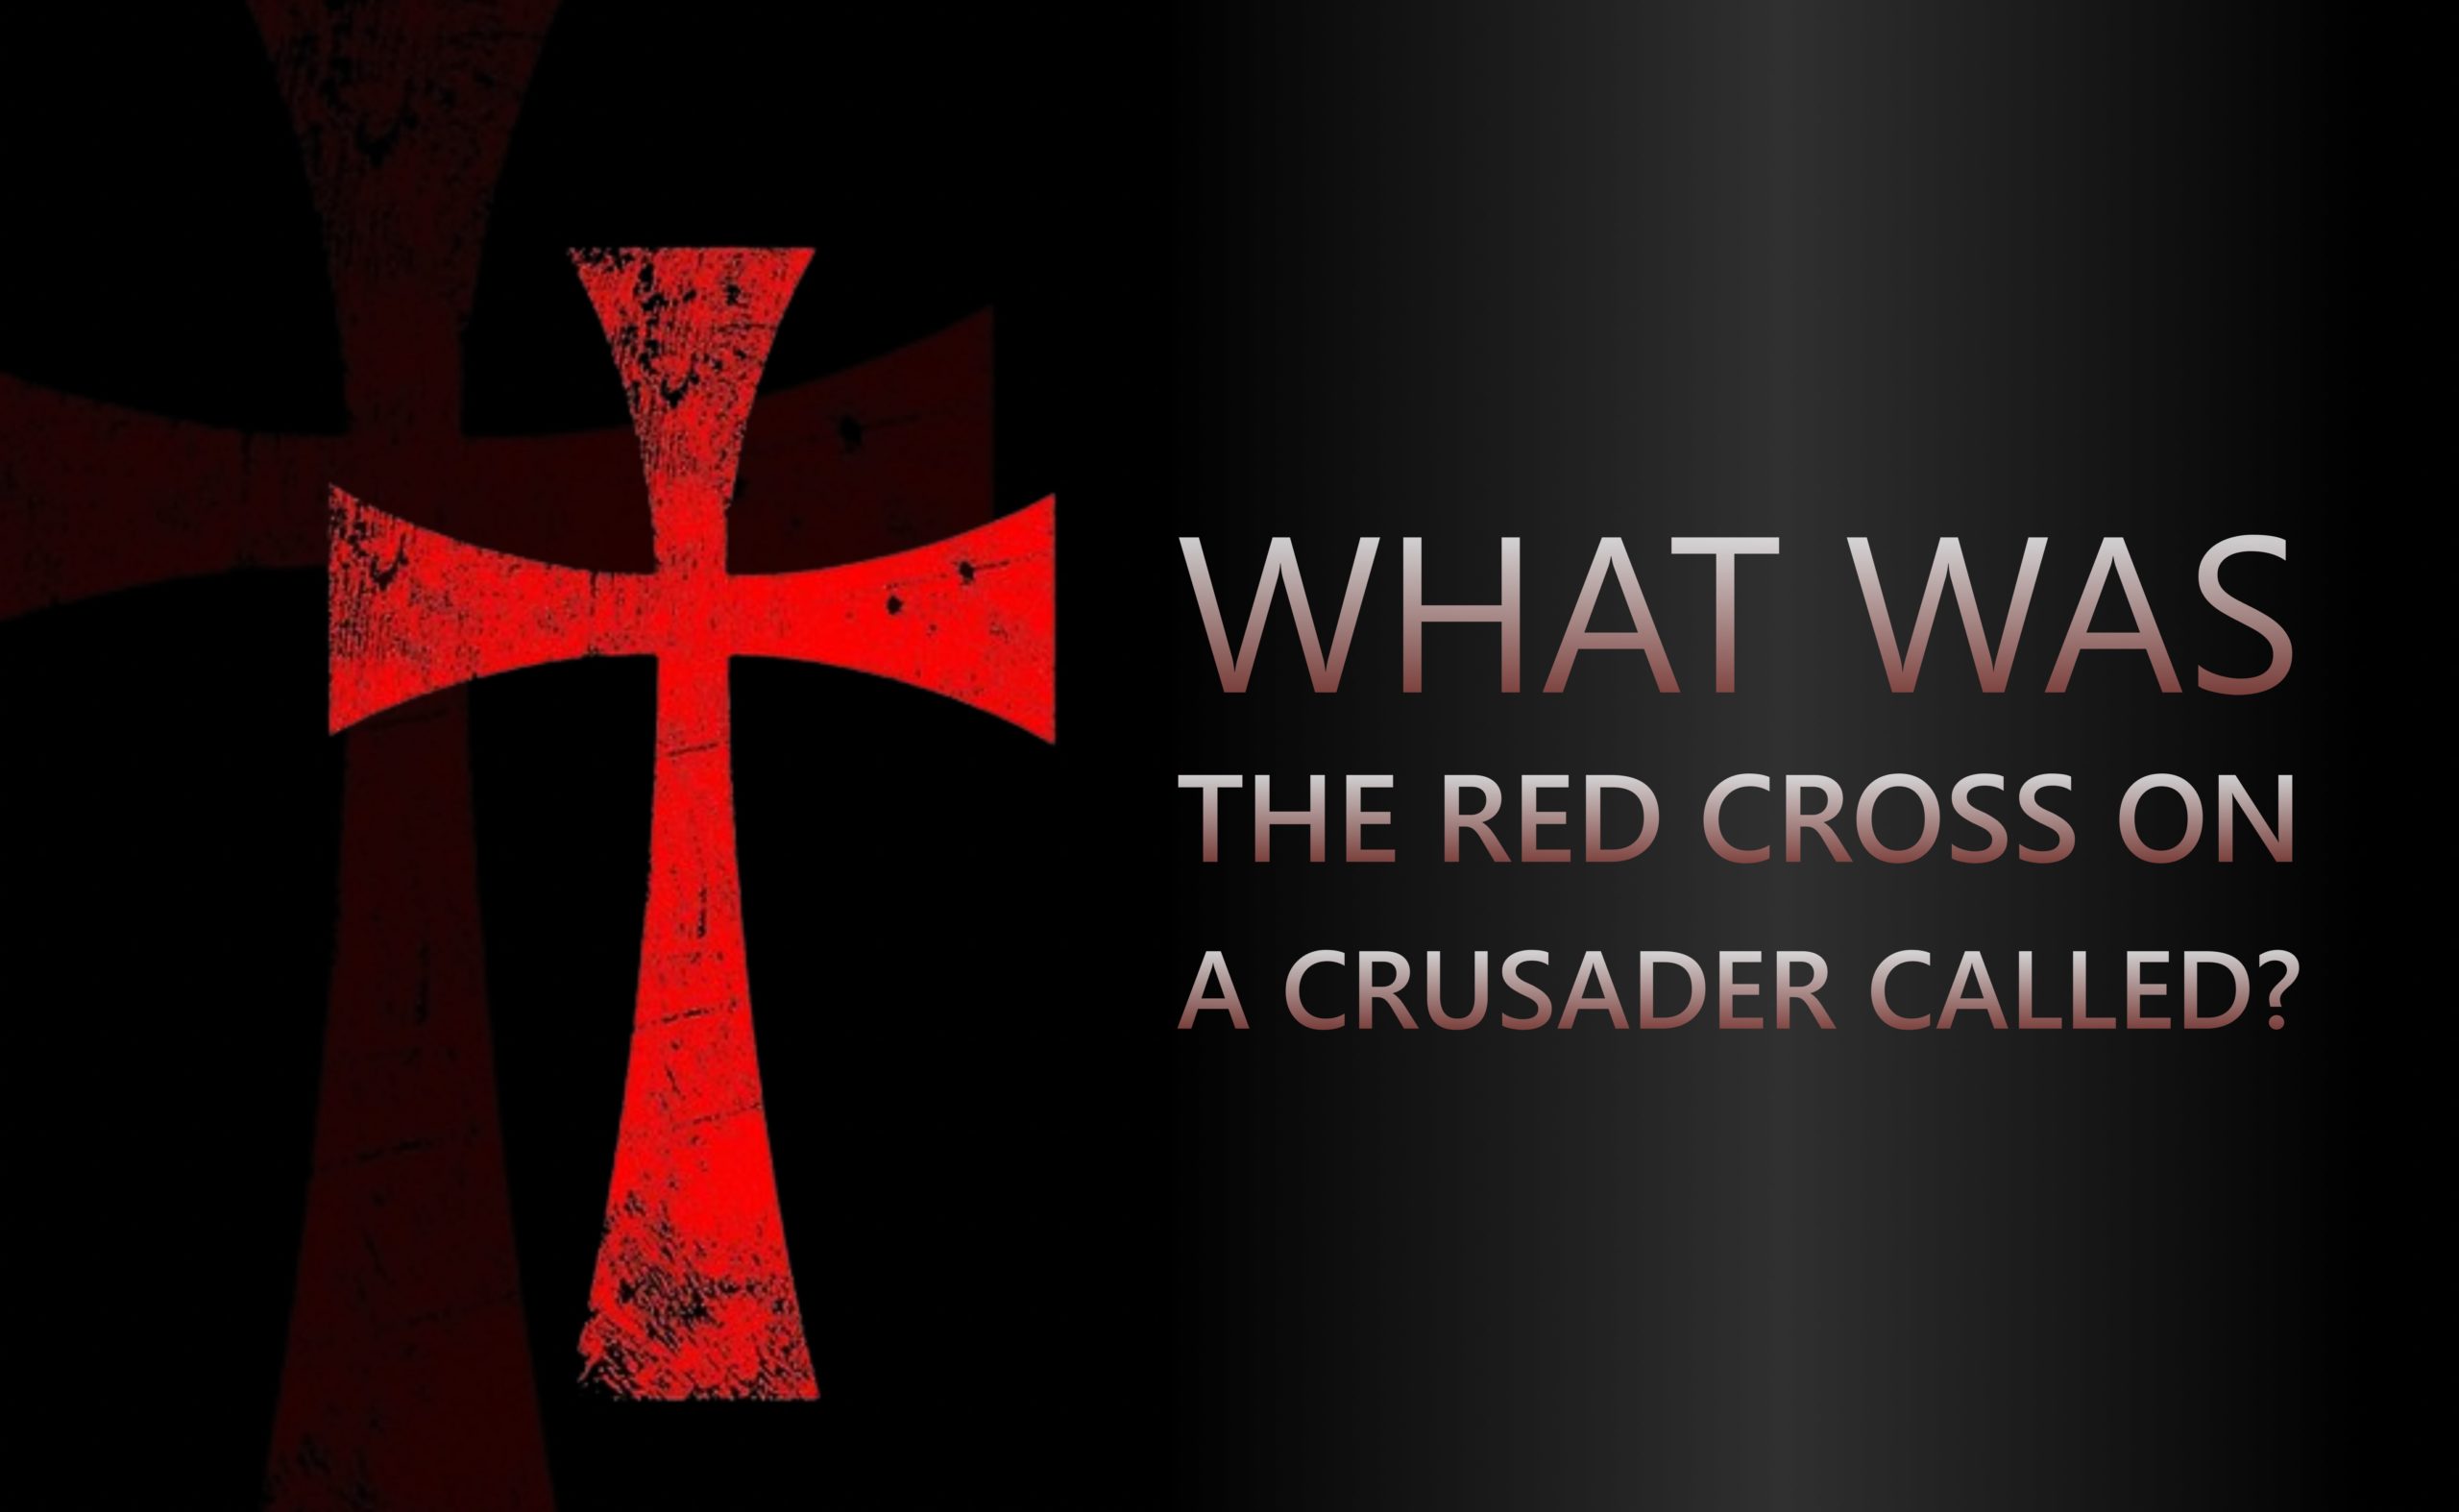 christian crusaders shield